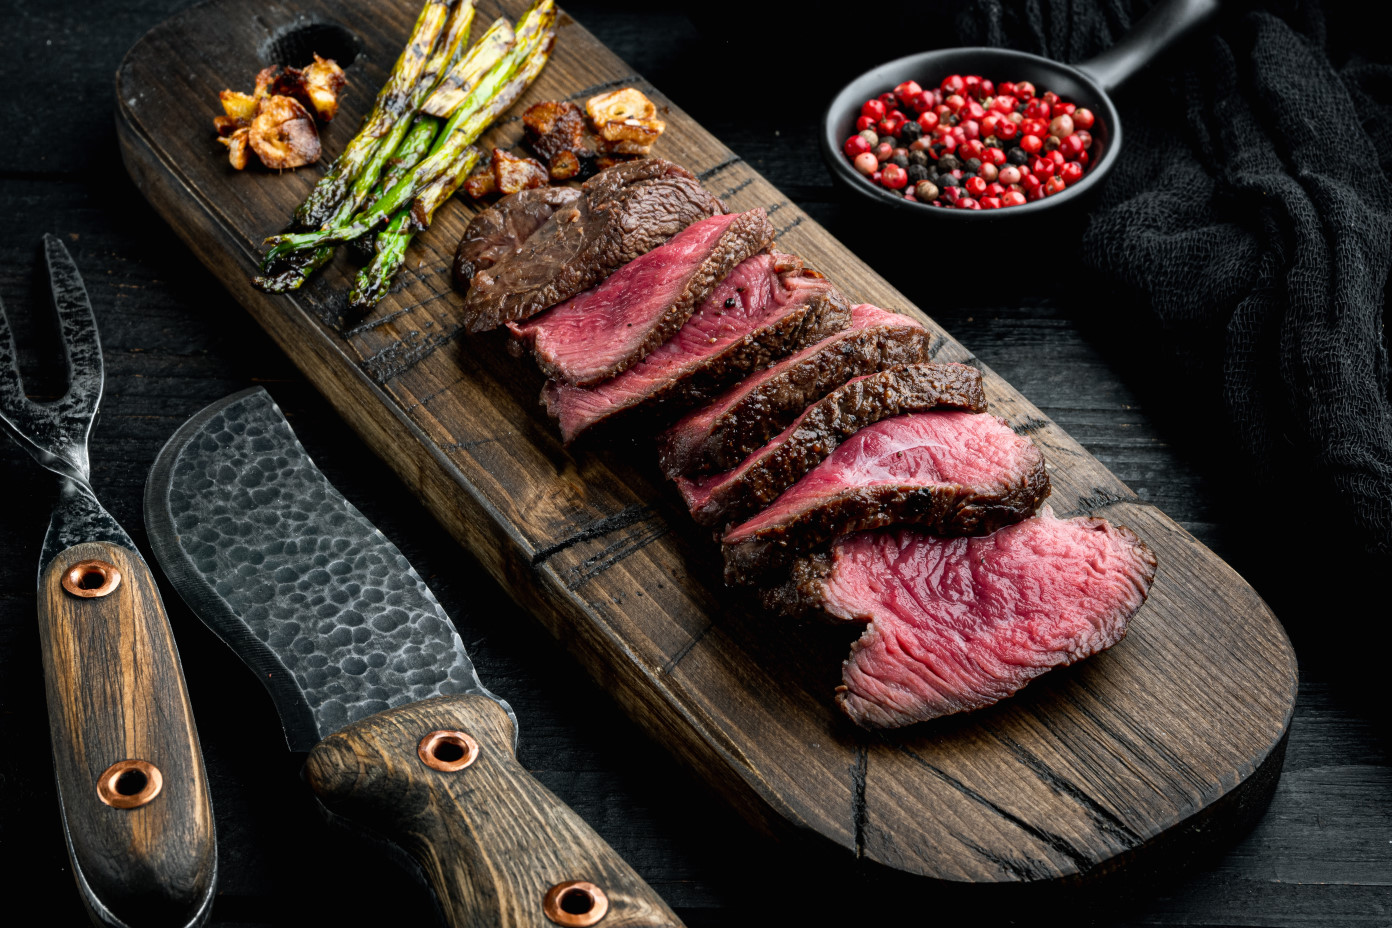 slices-medium-rare-grilled-marbled-meat-beef-steak-set-tenderloin-fillet-mignon-cut